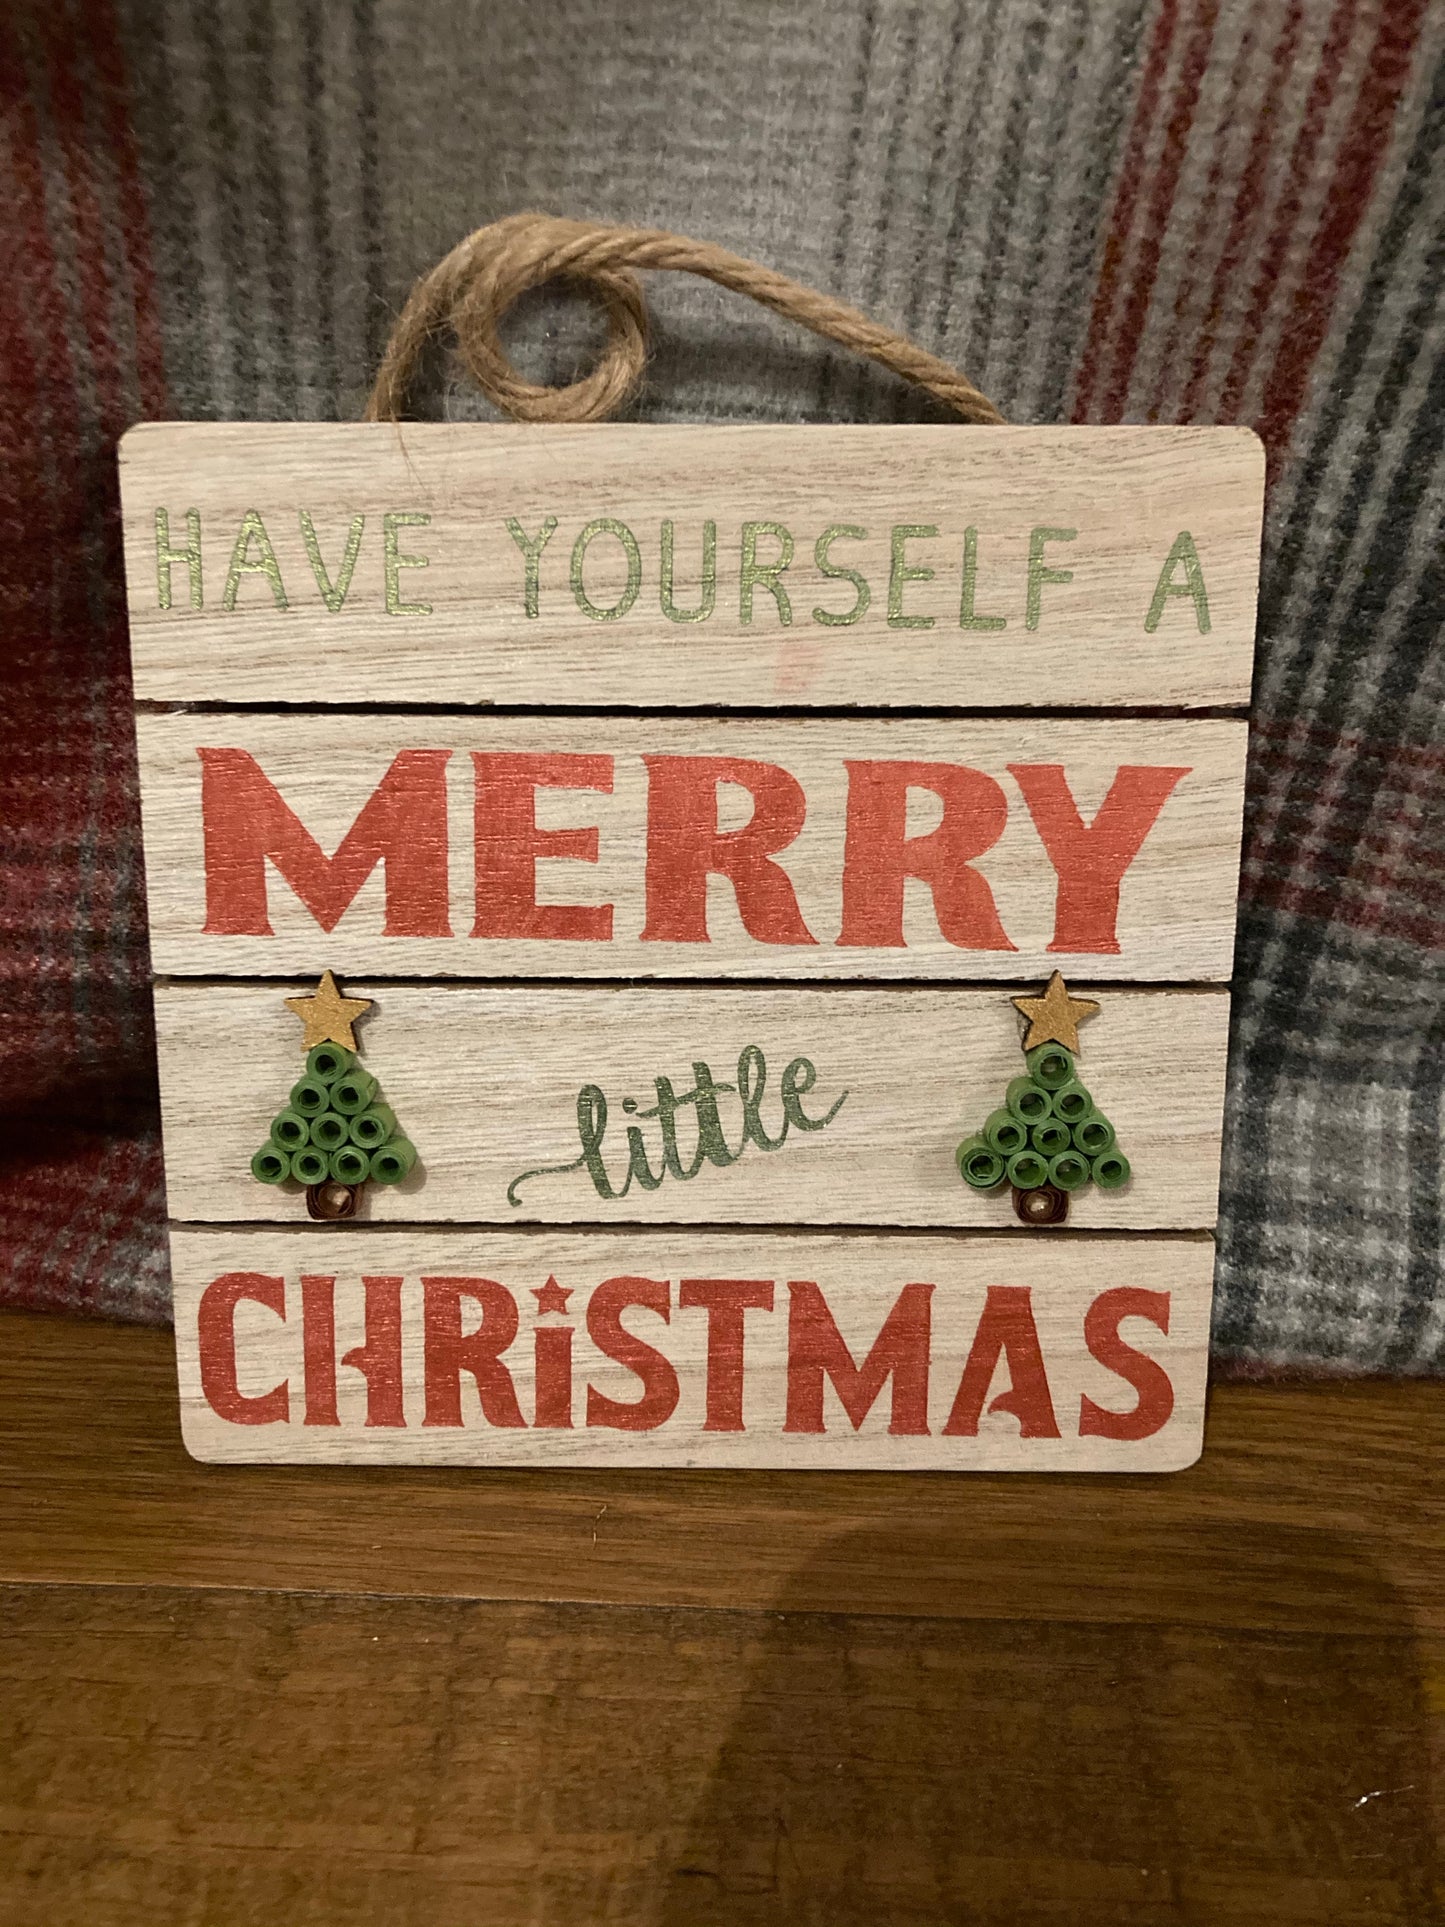 Christmas plaques